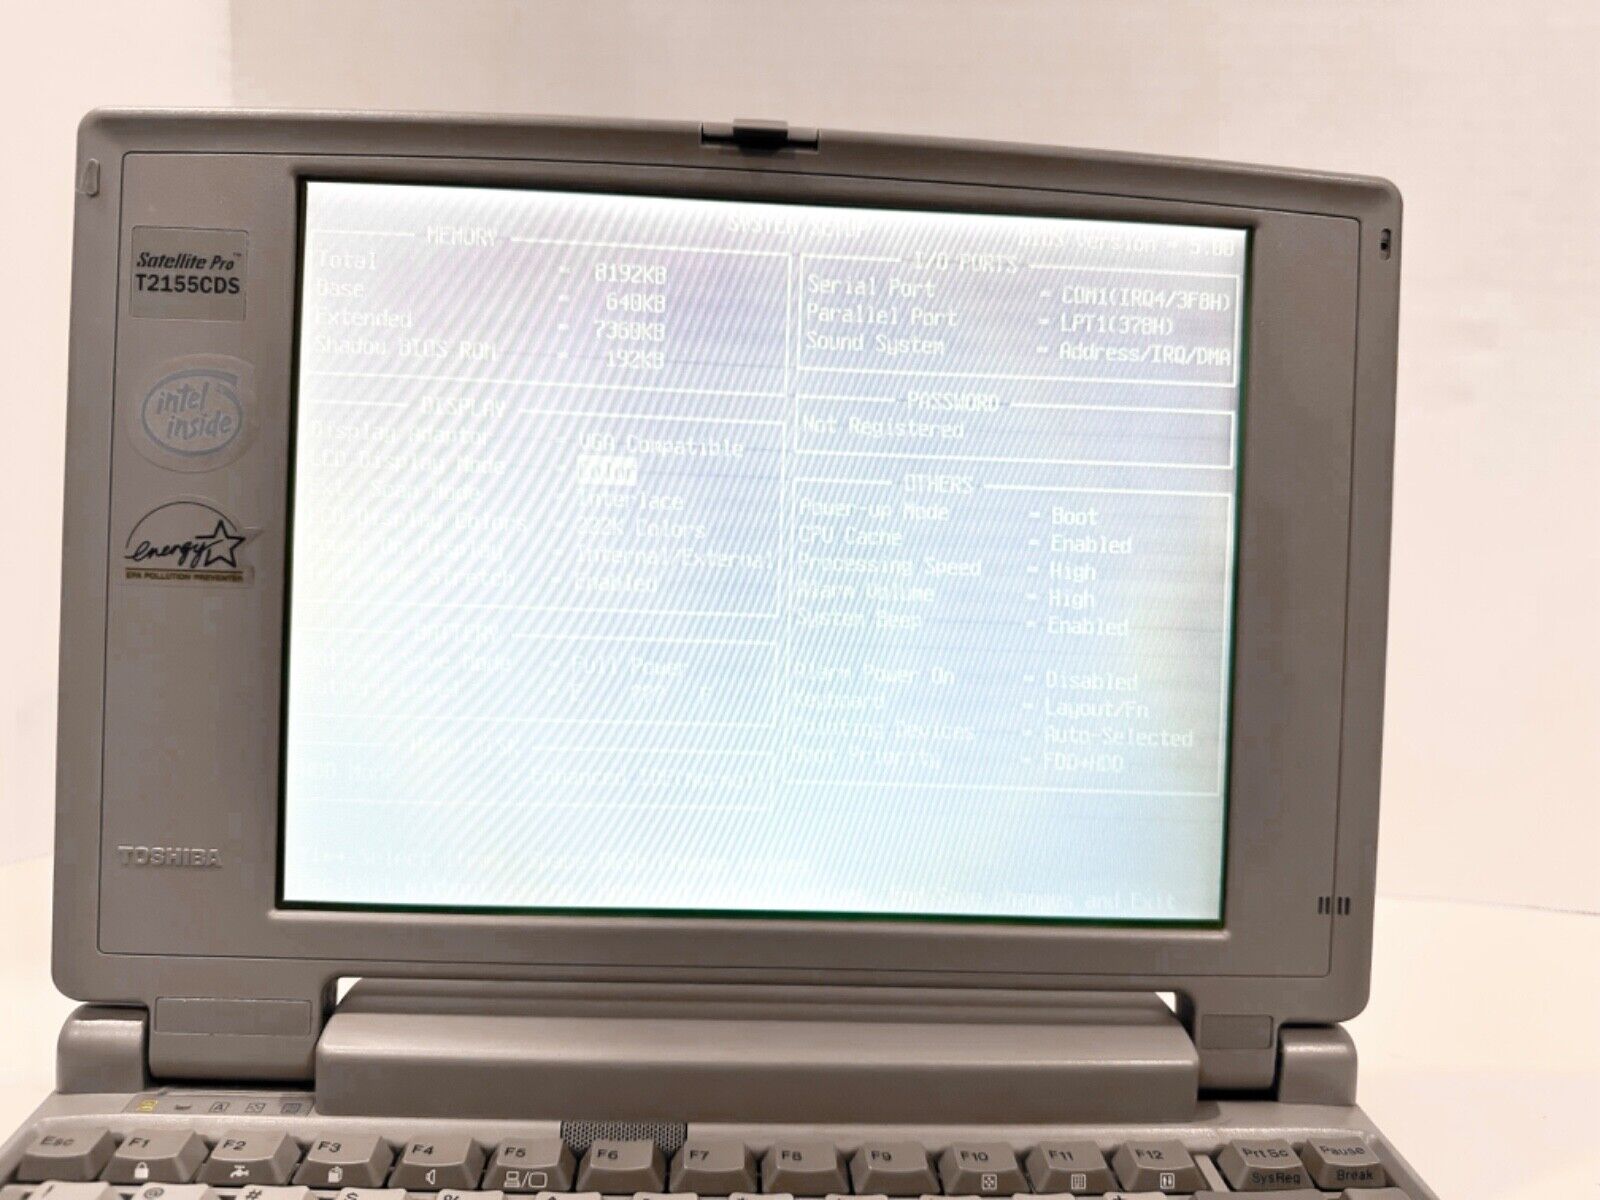 Rare Vintage Toshiba Satellite Pro T2155CDS  Retro Laptop - TURNS ON READ